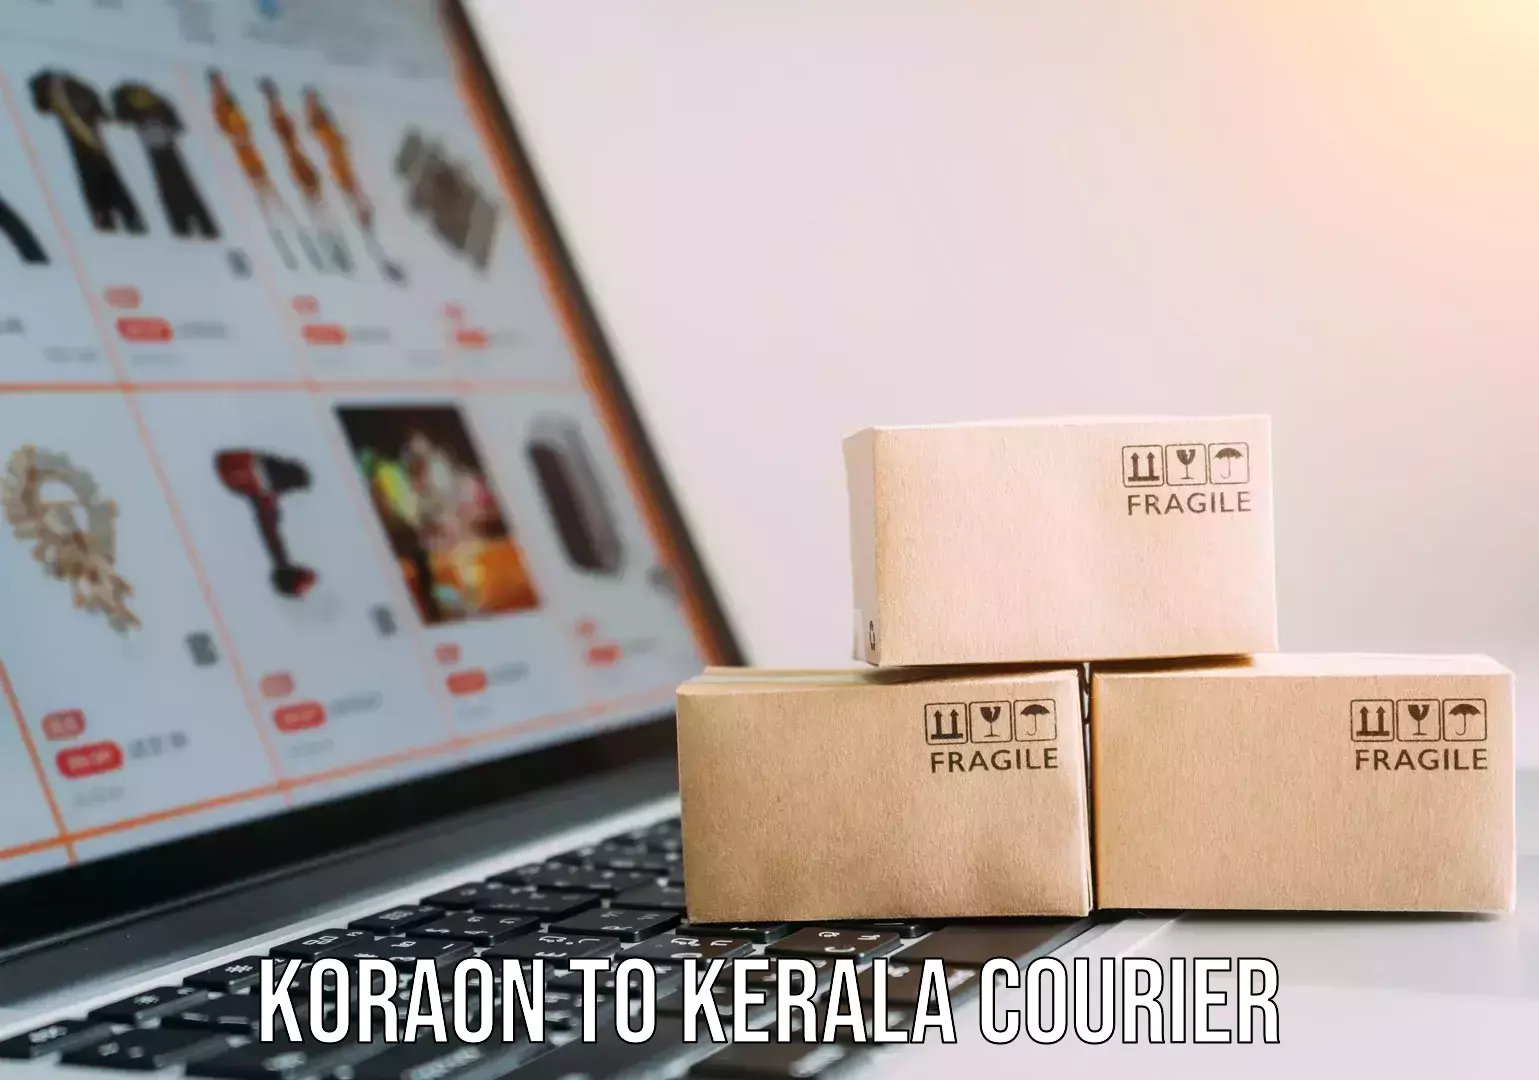 Furniture delivery service Koraon to Kerala